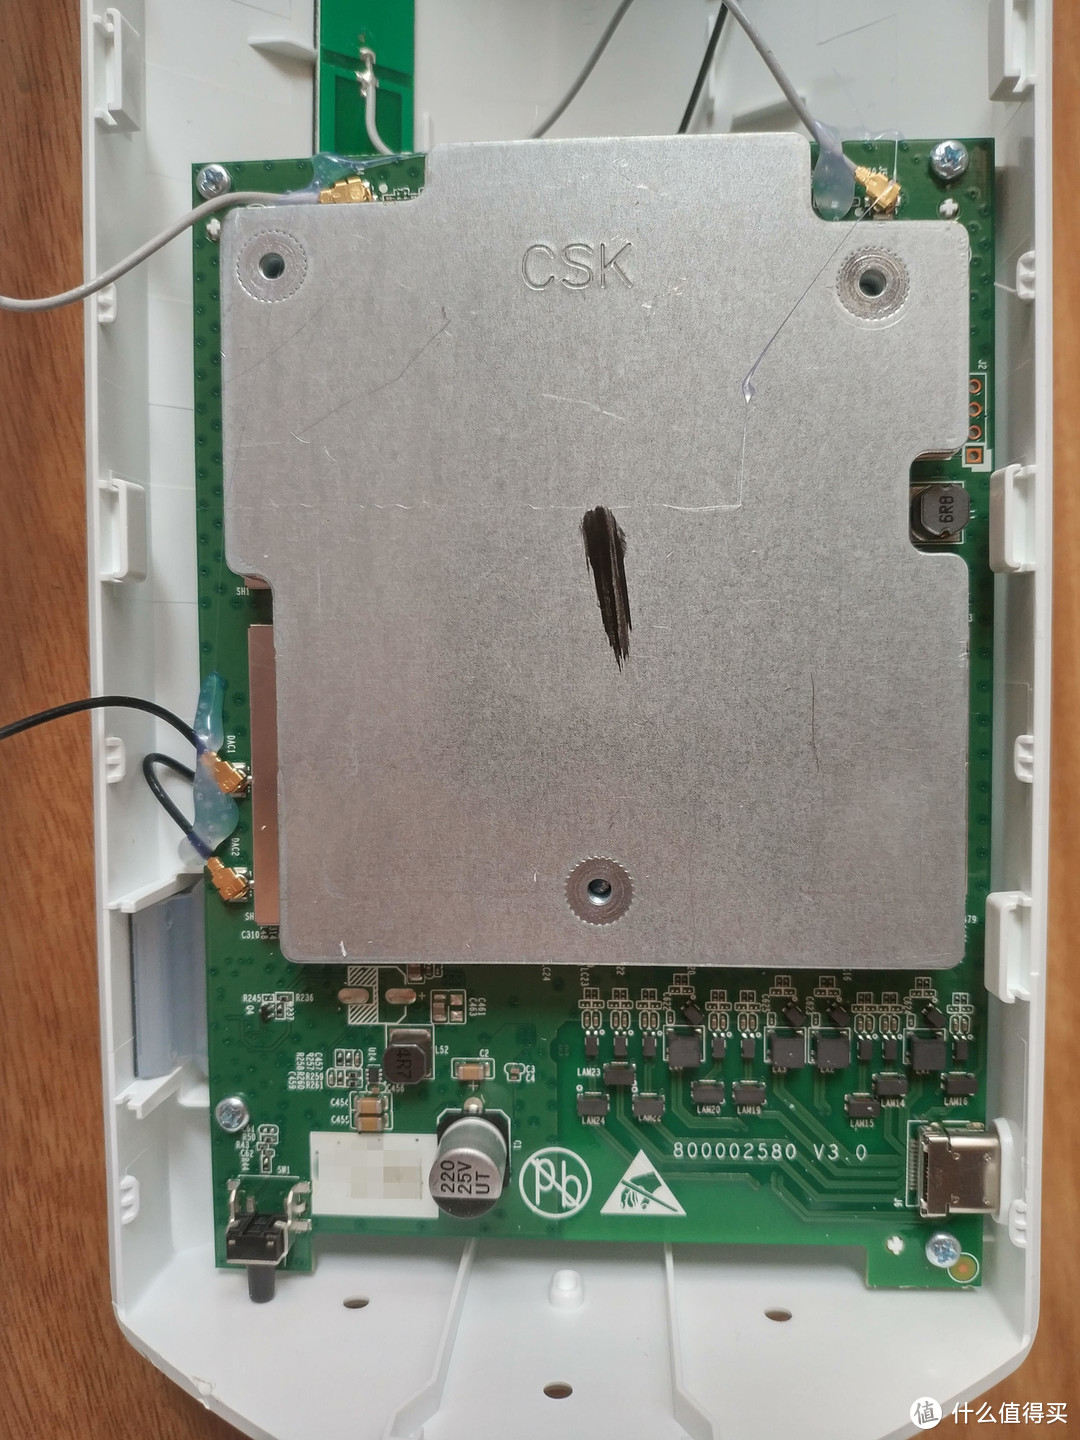 PHICOMM 斐讯 K2T 分离式千兆无线路由器 使用评测及拆机